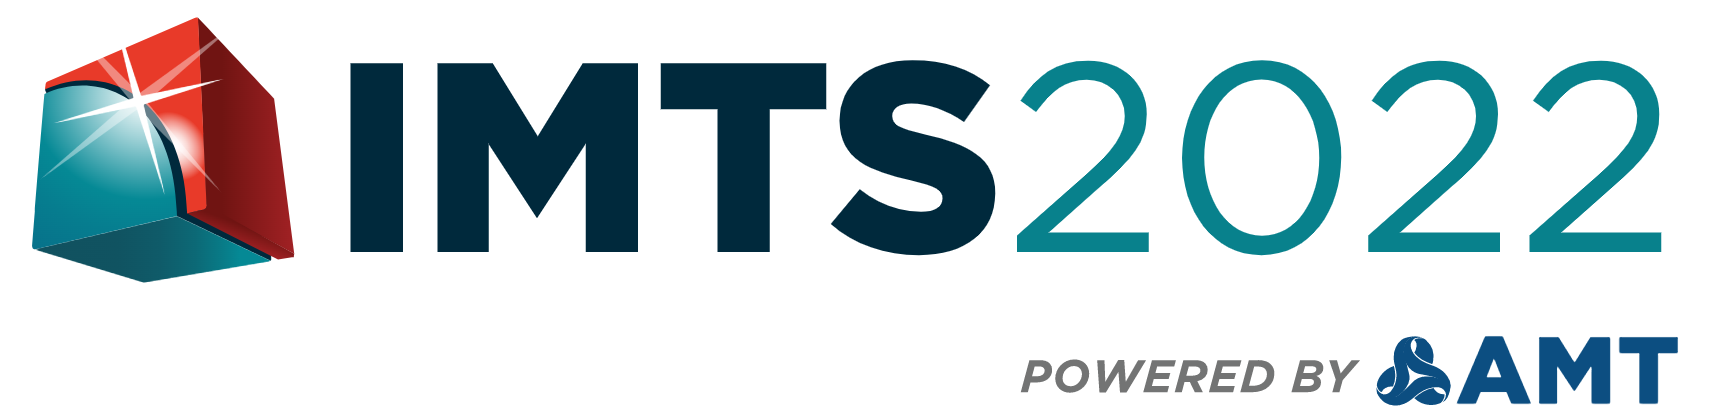 IMTS2022 Logo